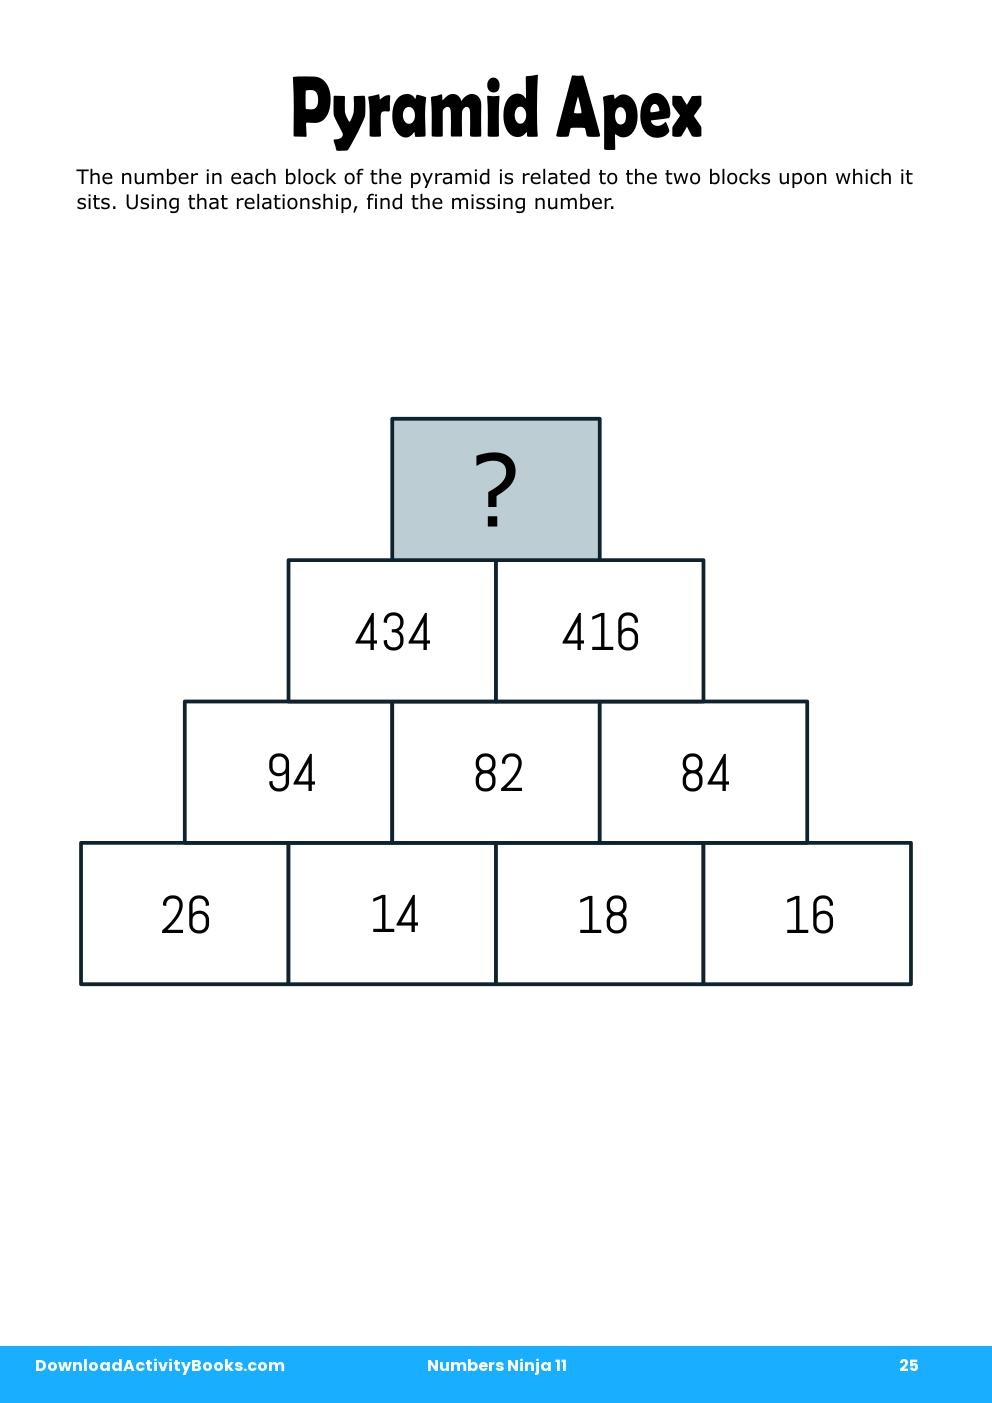 Pyramid Apex in Numbers Ninja 11